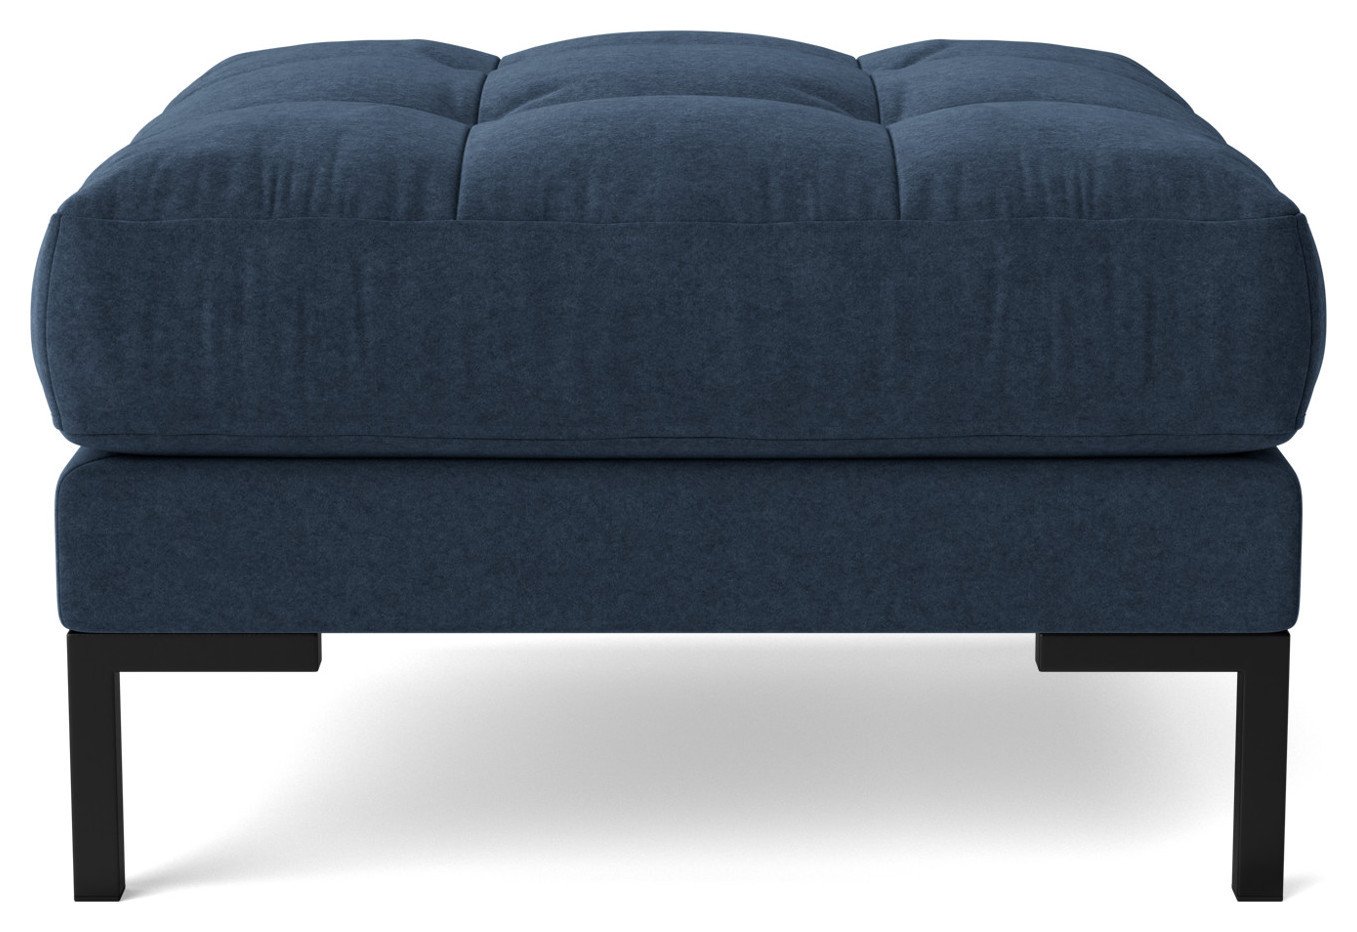 Swoon Landau Fabric Ottoman Footstool - Indigo Blue